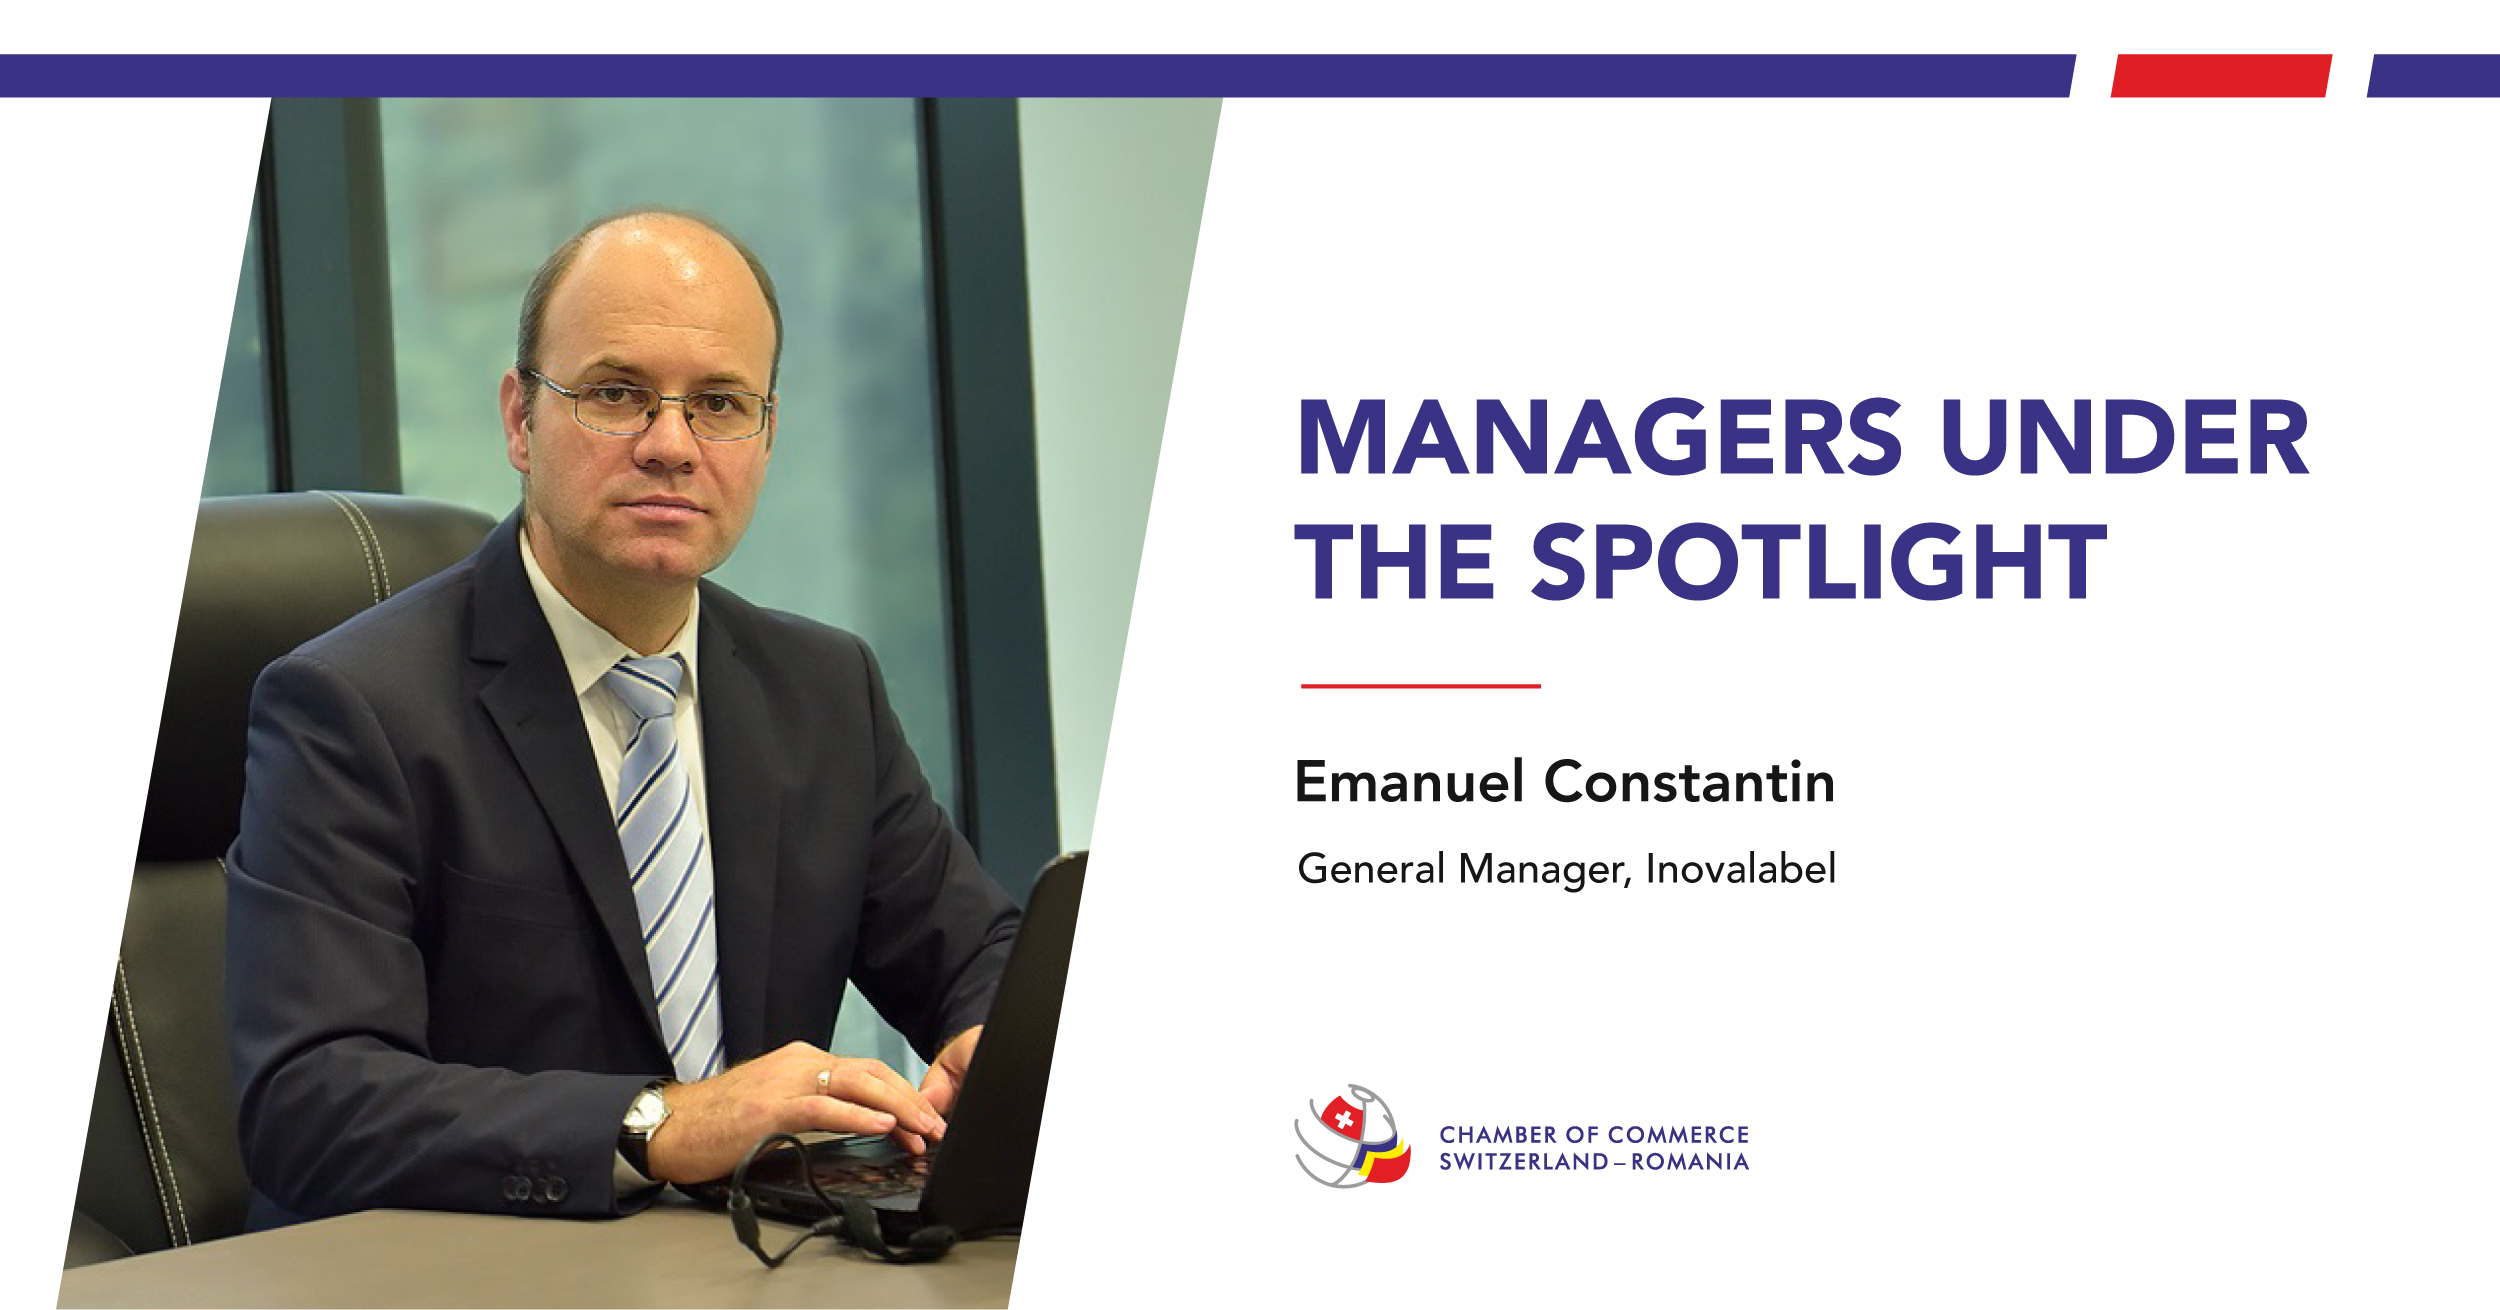 Managers under the spotlight - Emanuel Constantin, Inovalabel